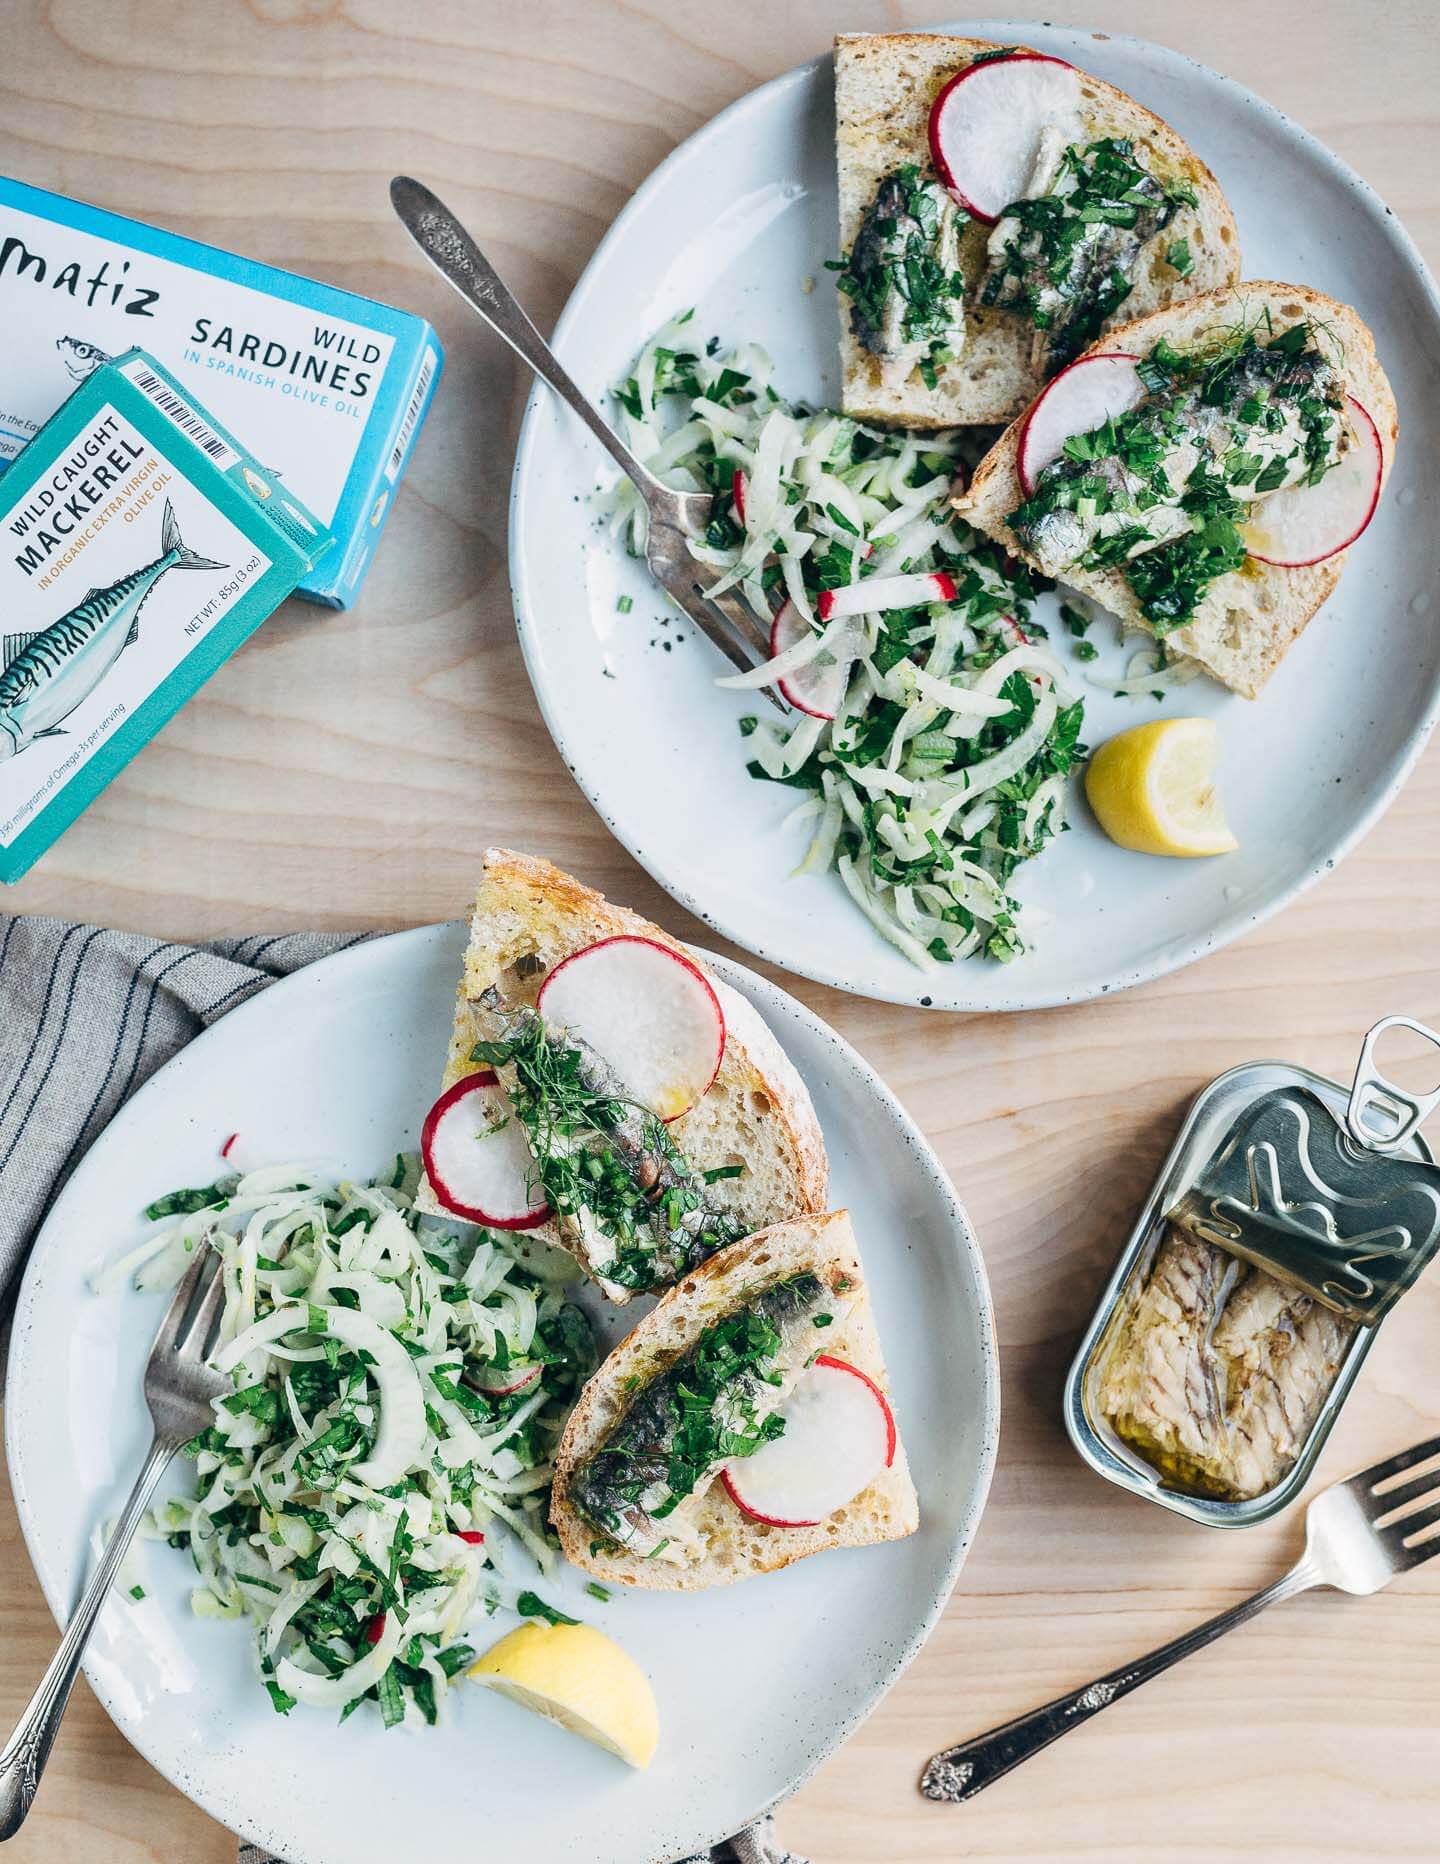 Herbed sardine toasts with fennel salad, made with Matiz tinned sardines. 